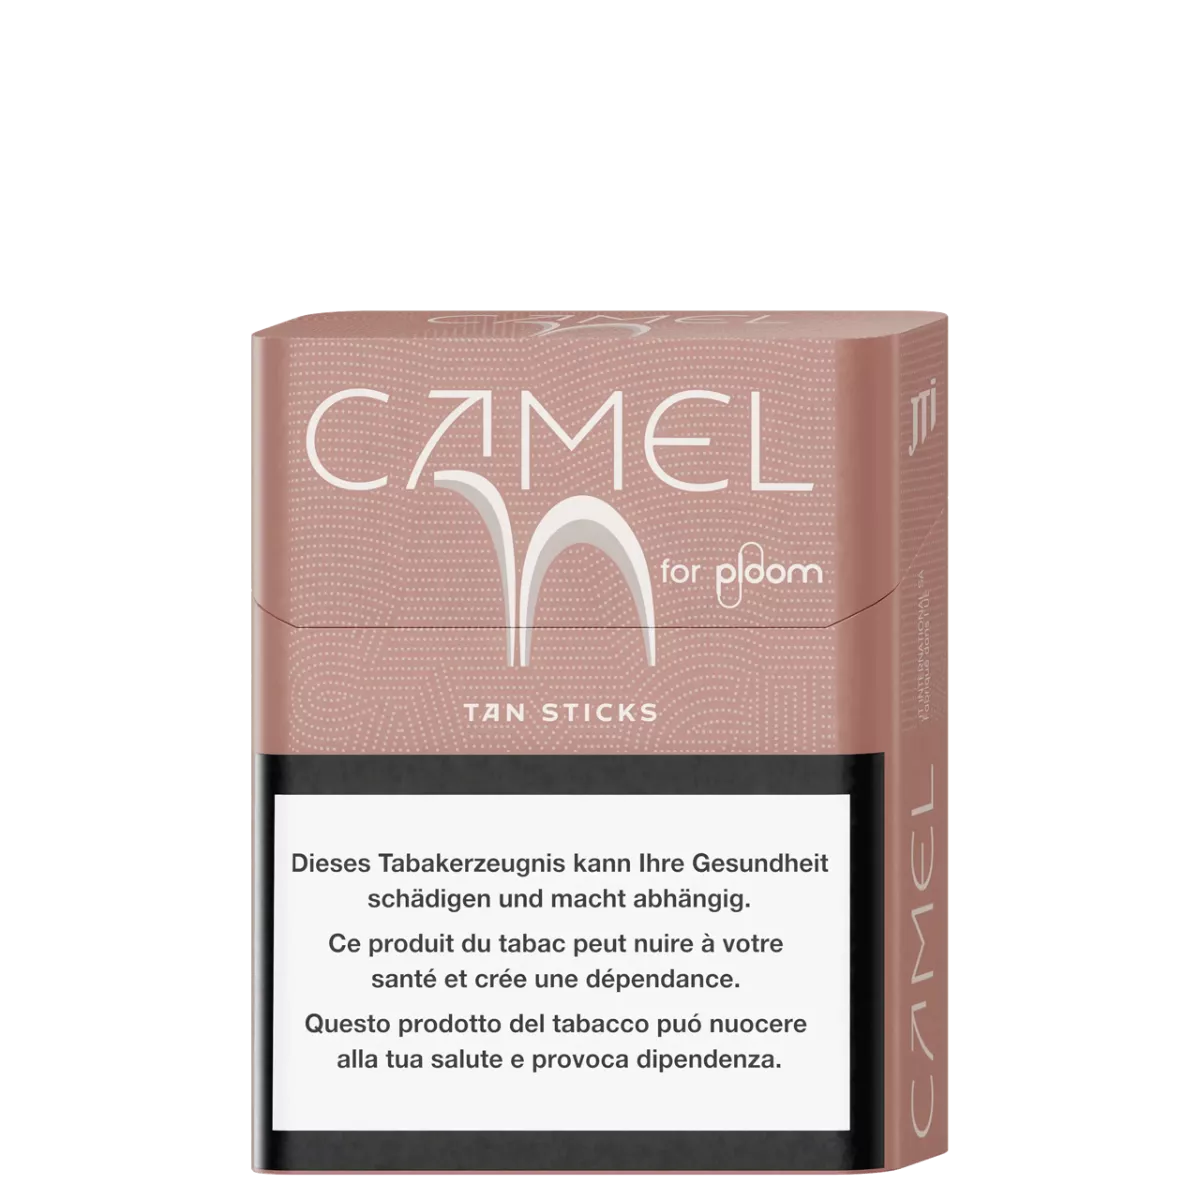 Camel Tan sticks for Ploom pack
